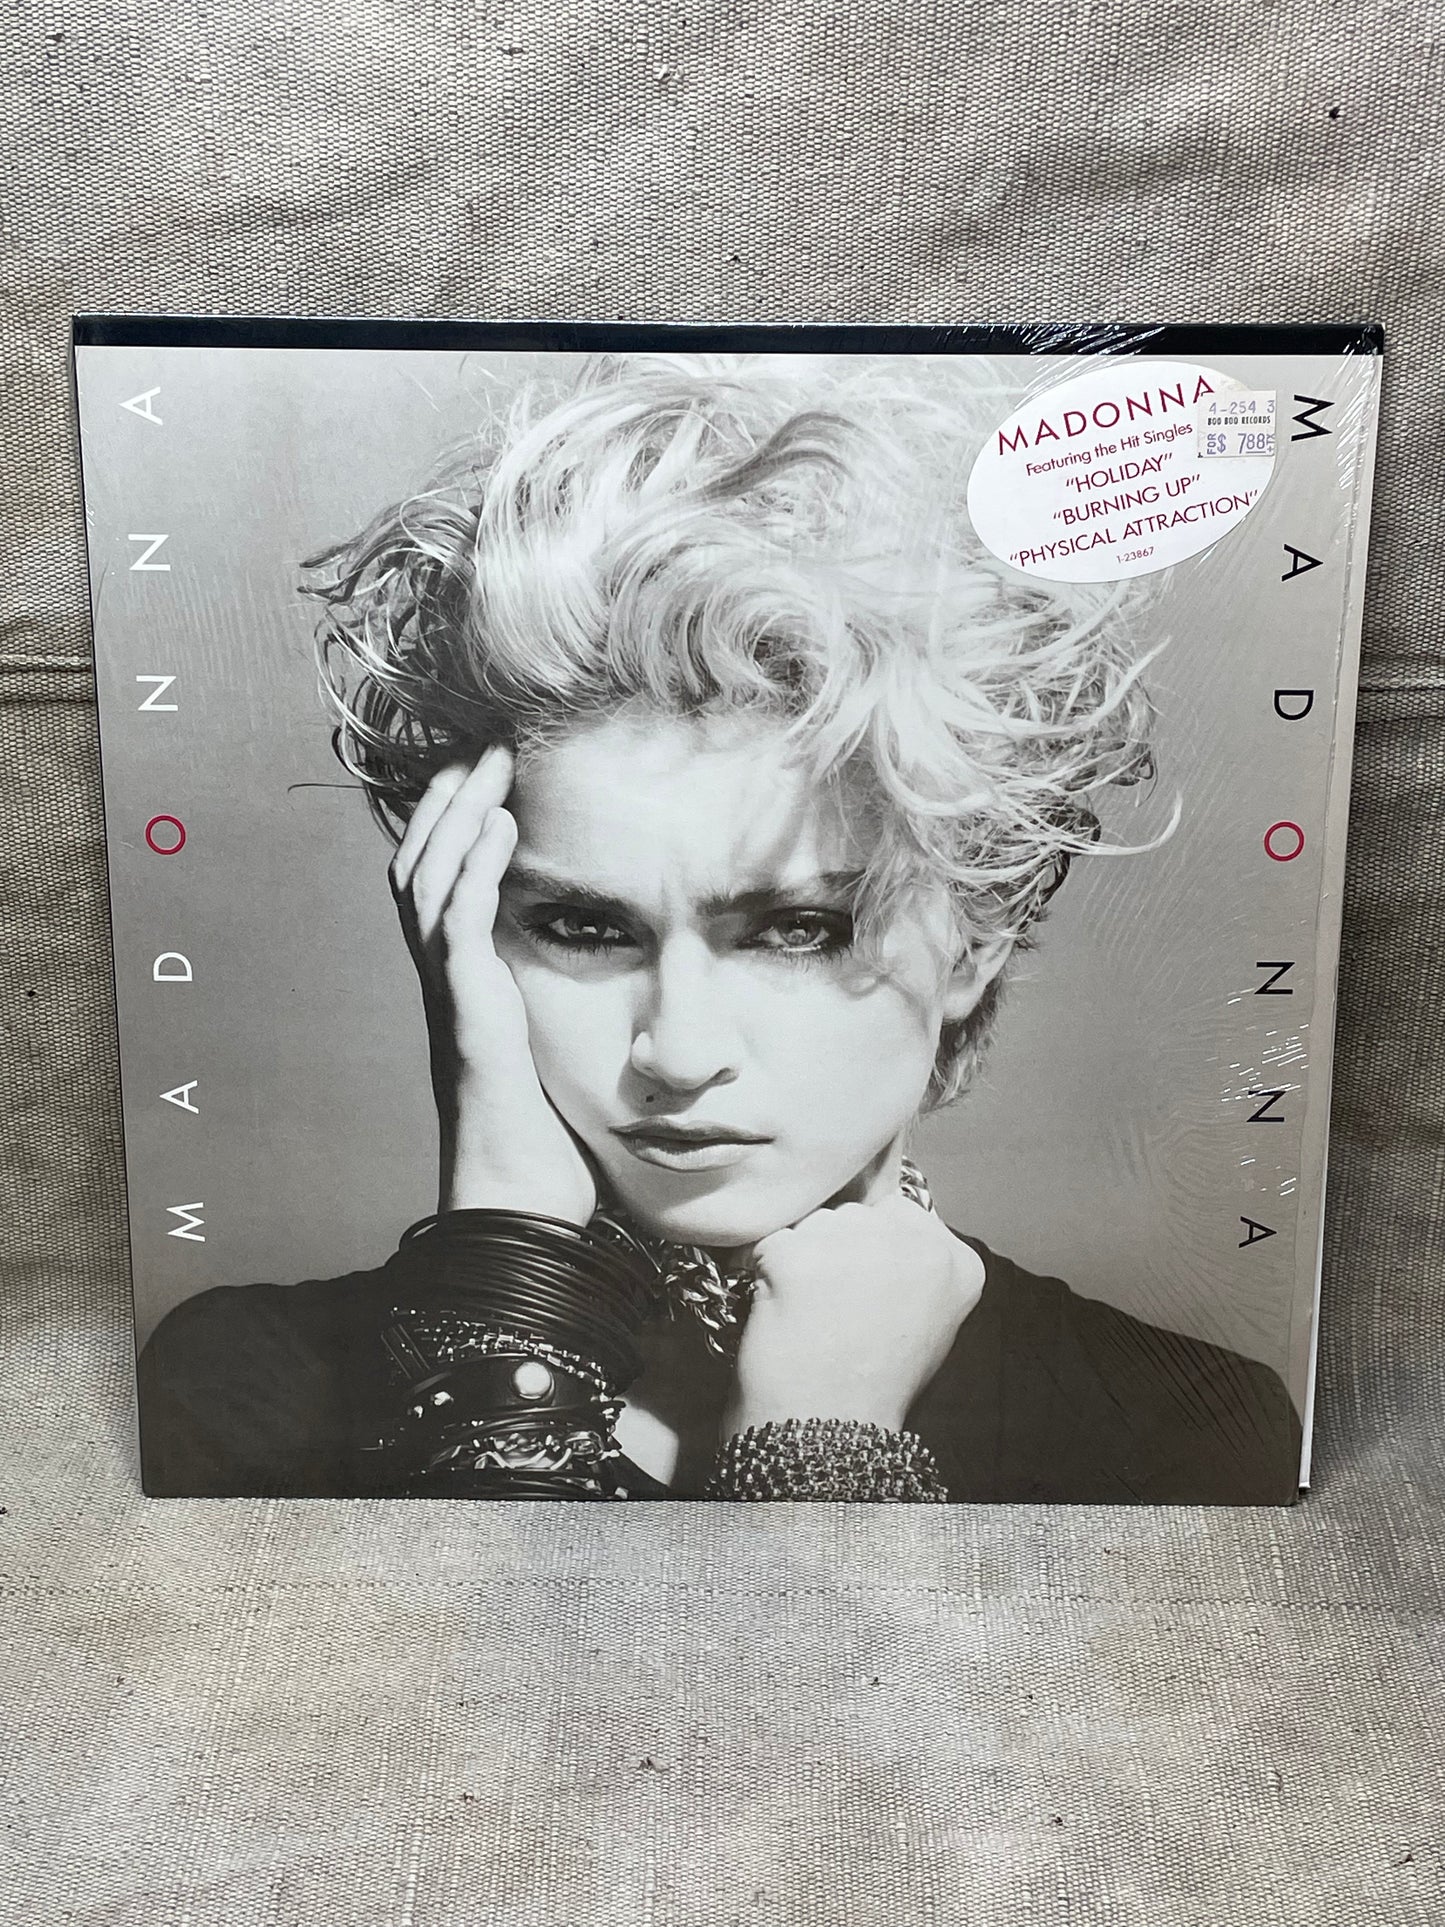 Vintage VG VG Madonna Self Titled LP 1983 Sire Records w/ Lyric Sleeve Record LP Shrink Hype Sticker